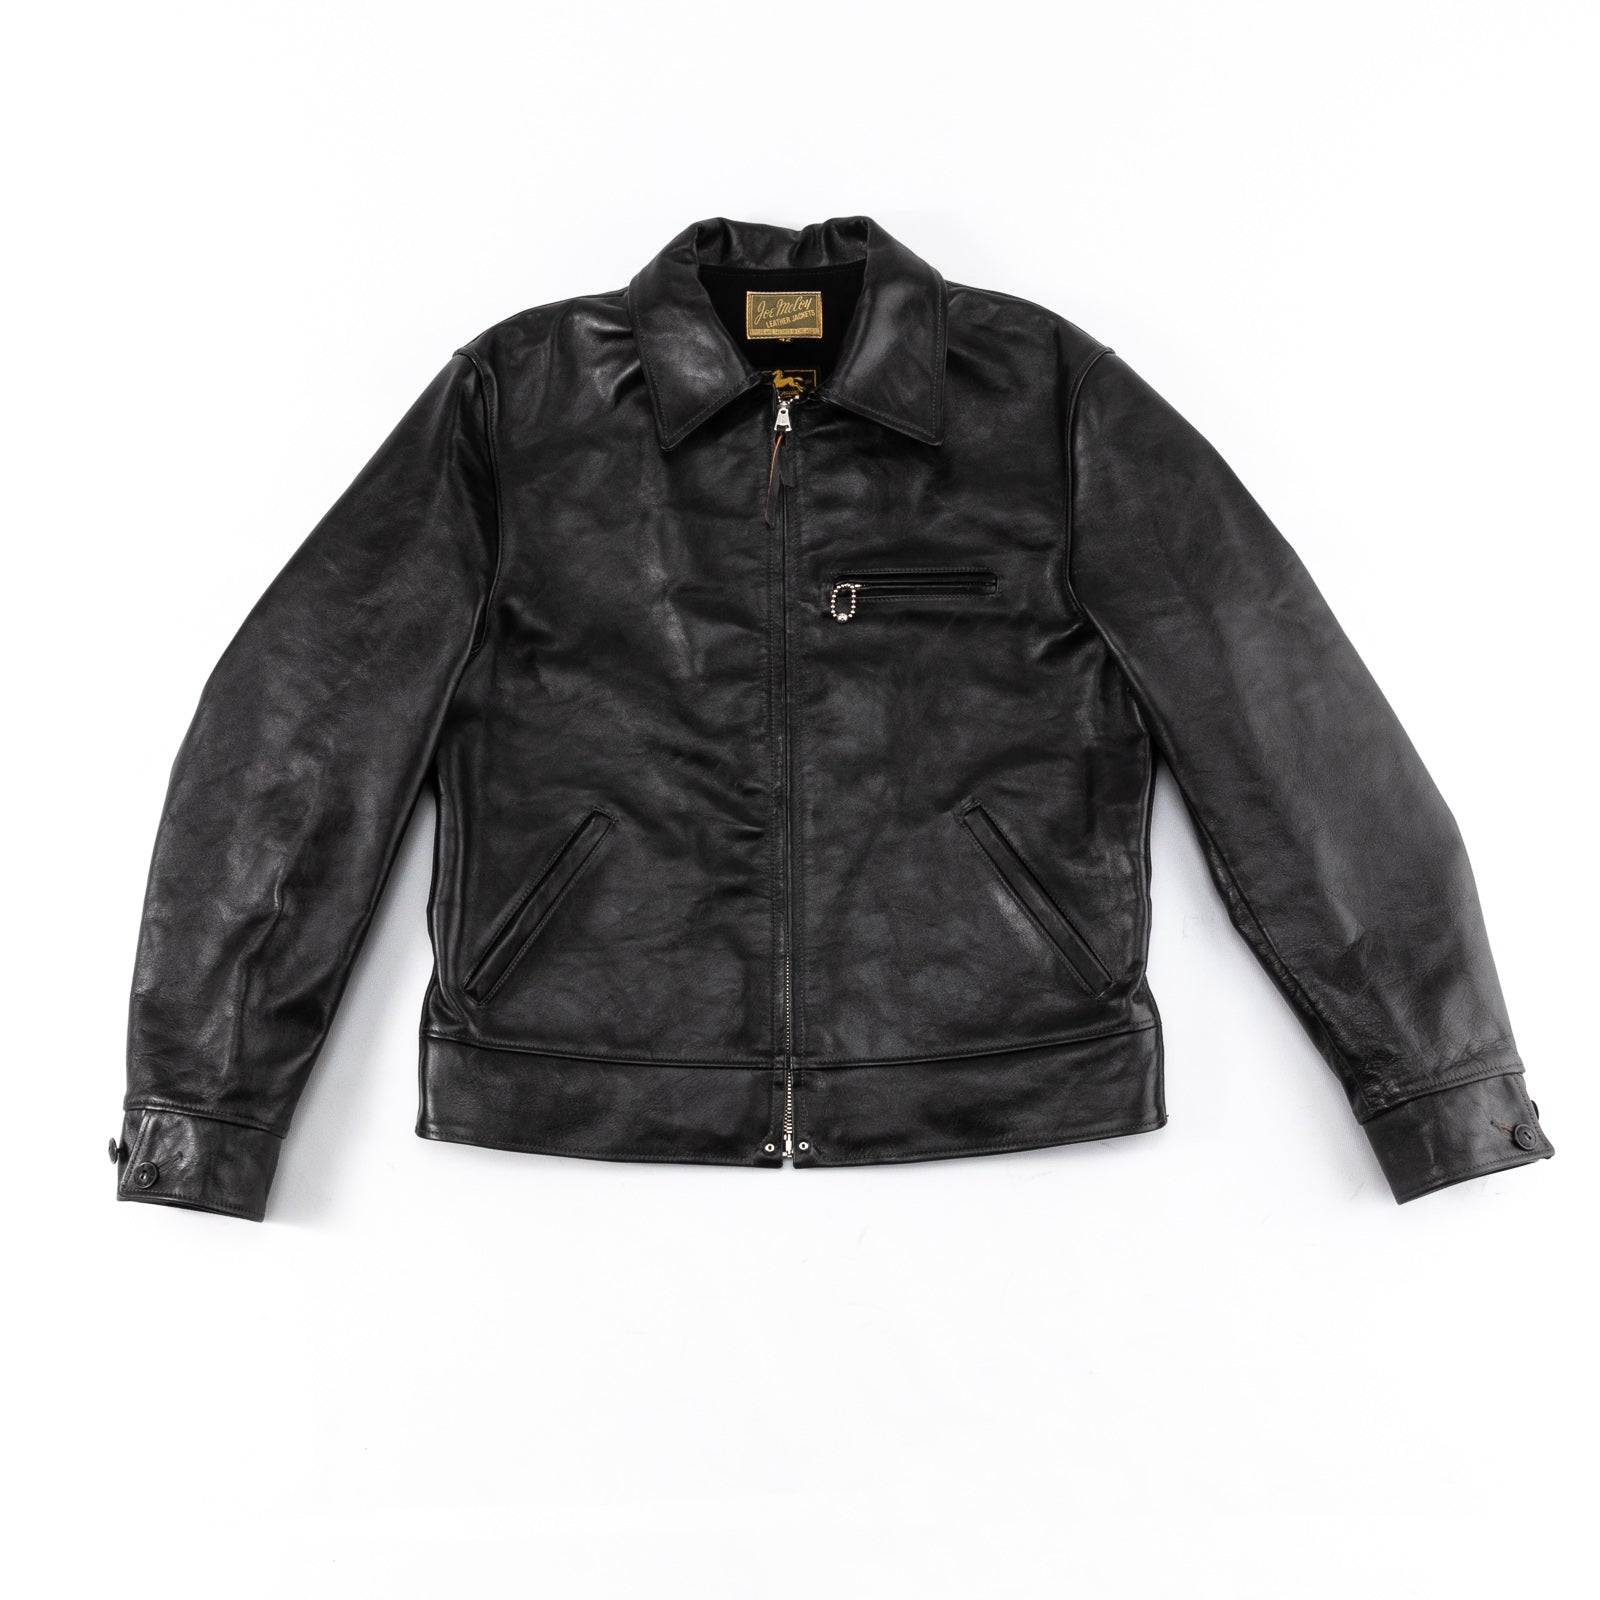 Nelson 30s Sports Jacket - Black Horsehide